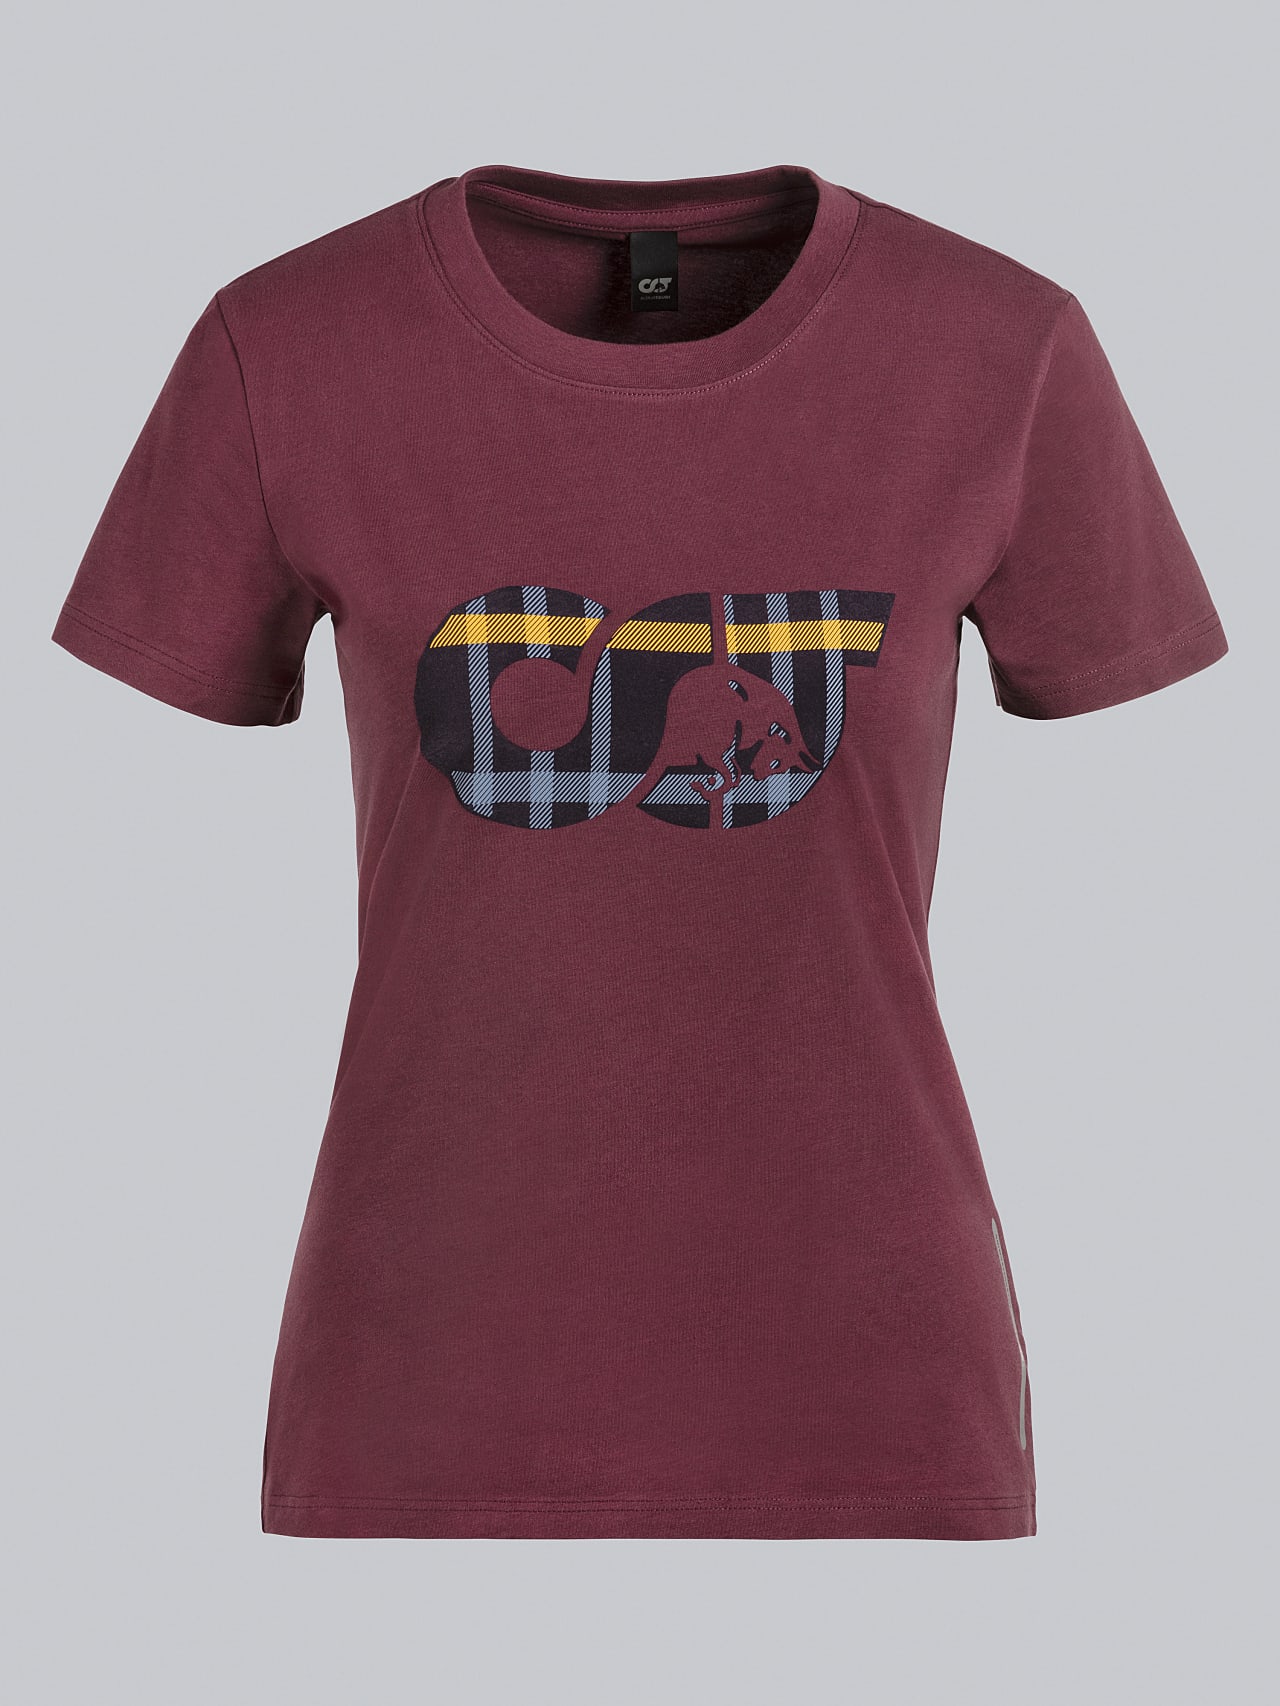 AlphaTauri | JANPA V1.Y5.02 | Logo Print T-Shirt in bordeaux for Women